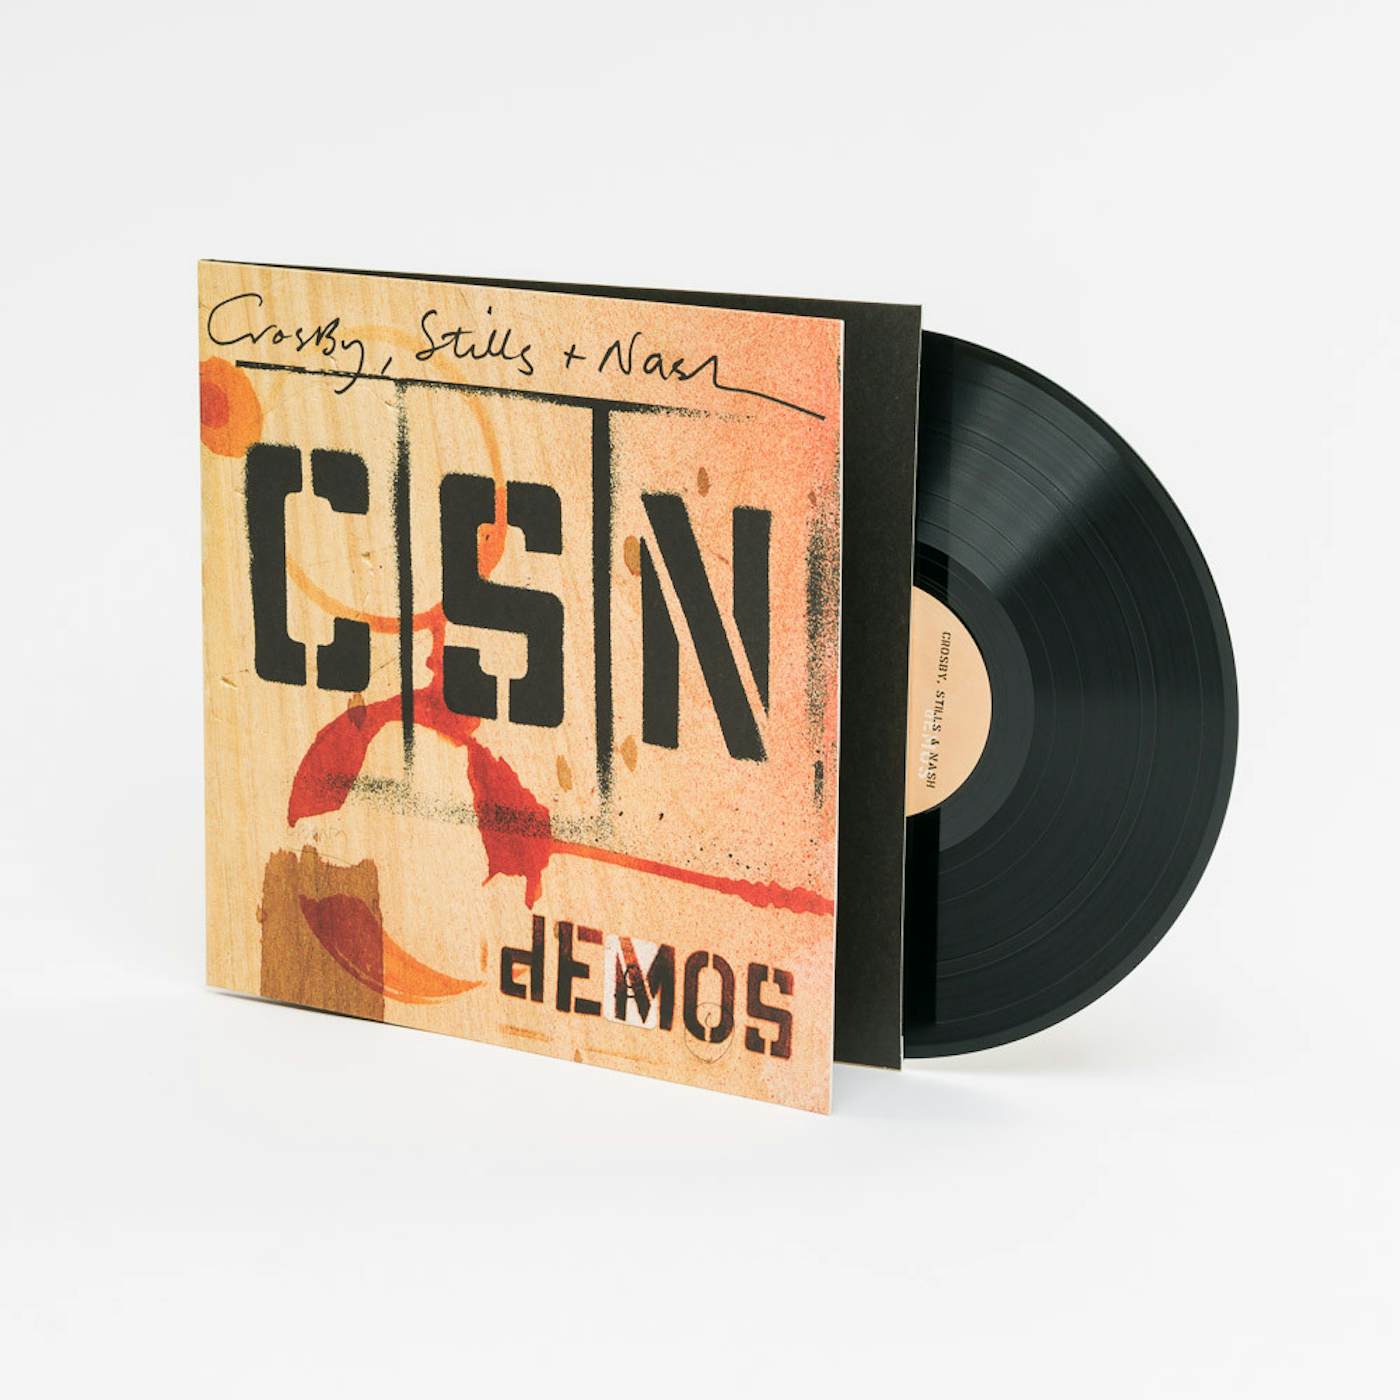 Crosby, Stills & Nash Demos Vinyl Record